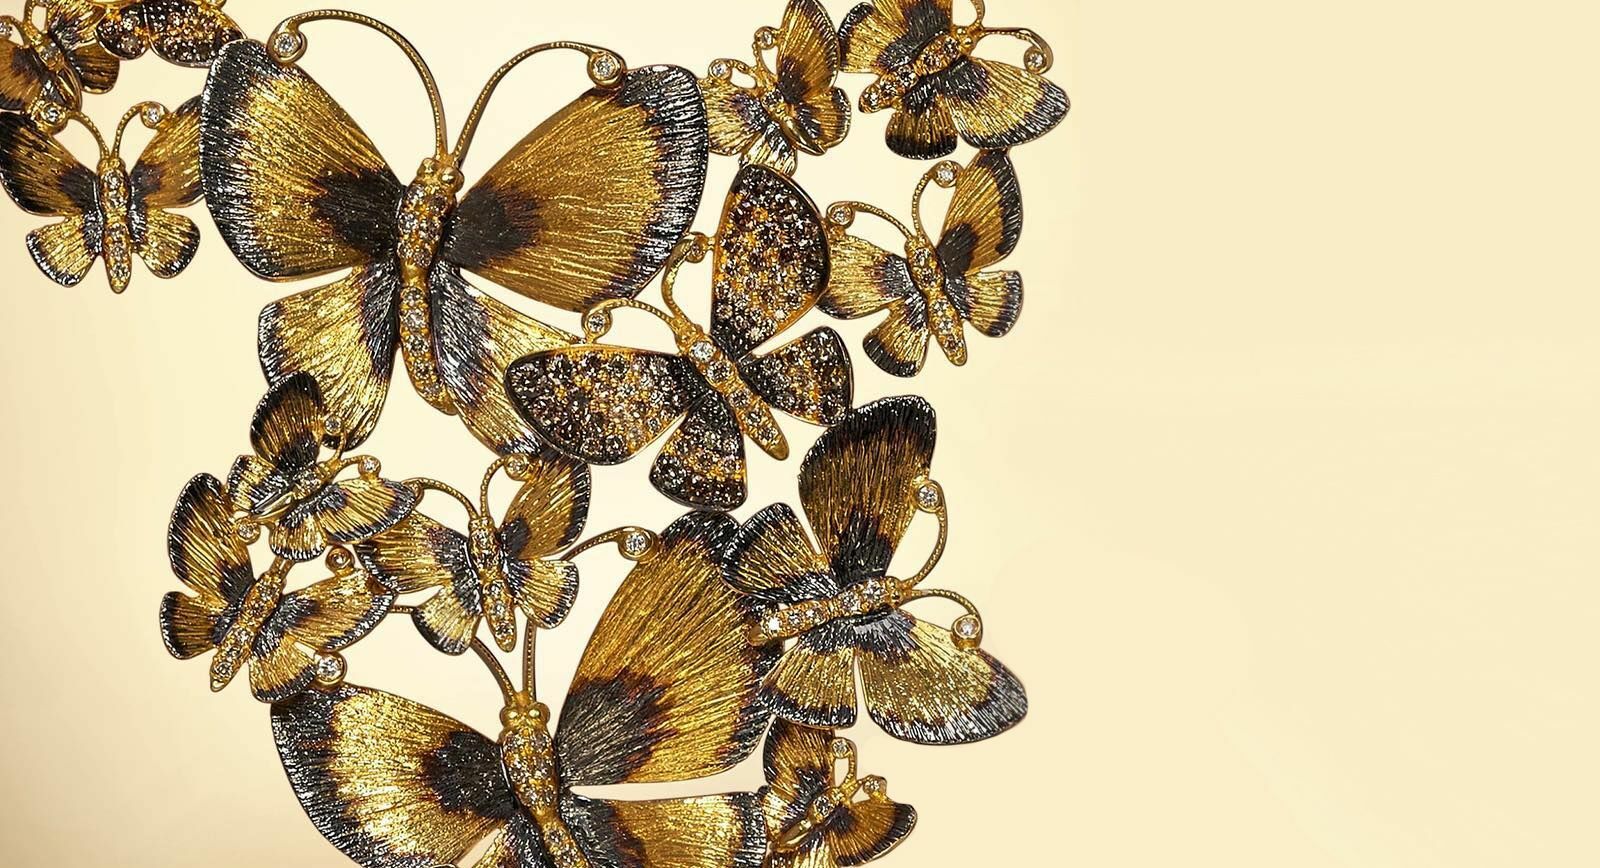 Butterflies by Annoushka Ducas